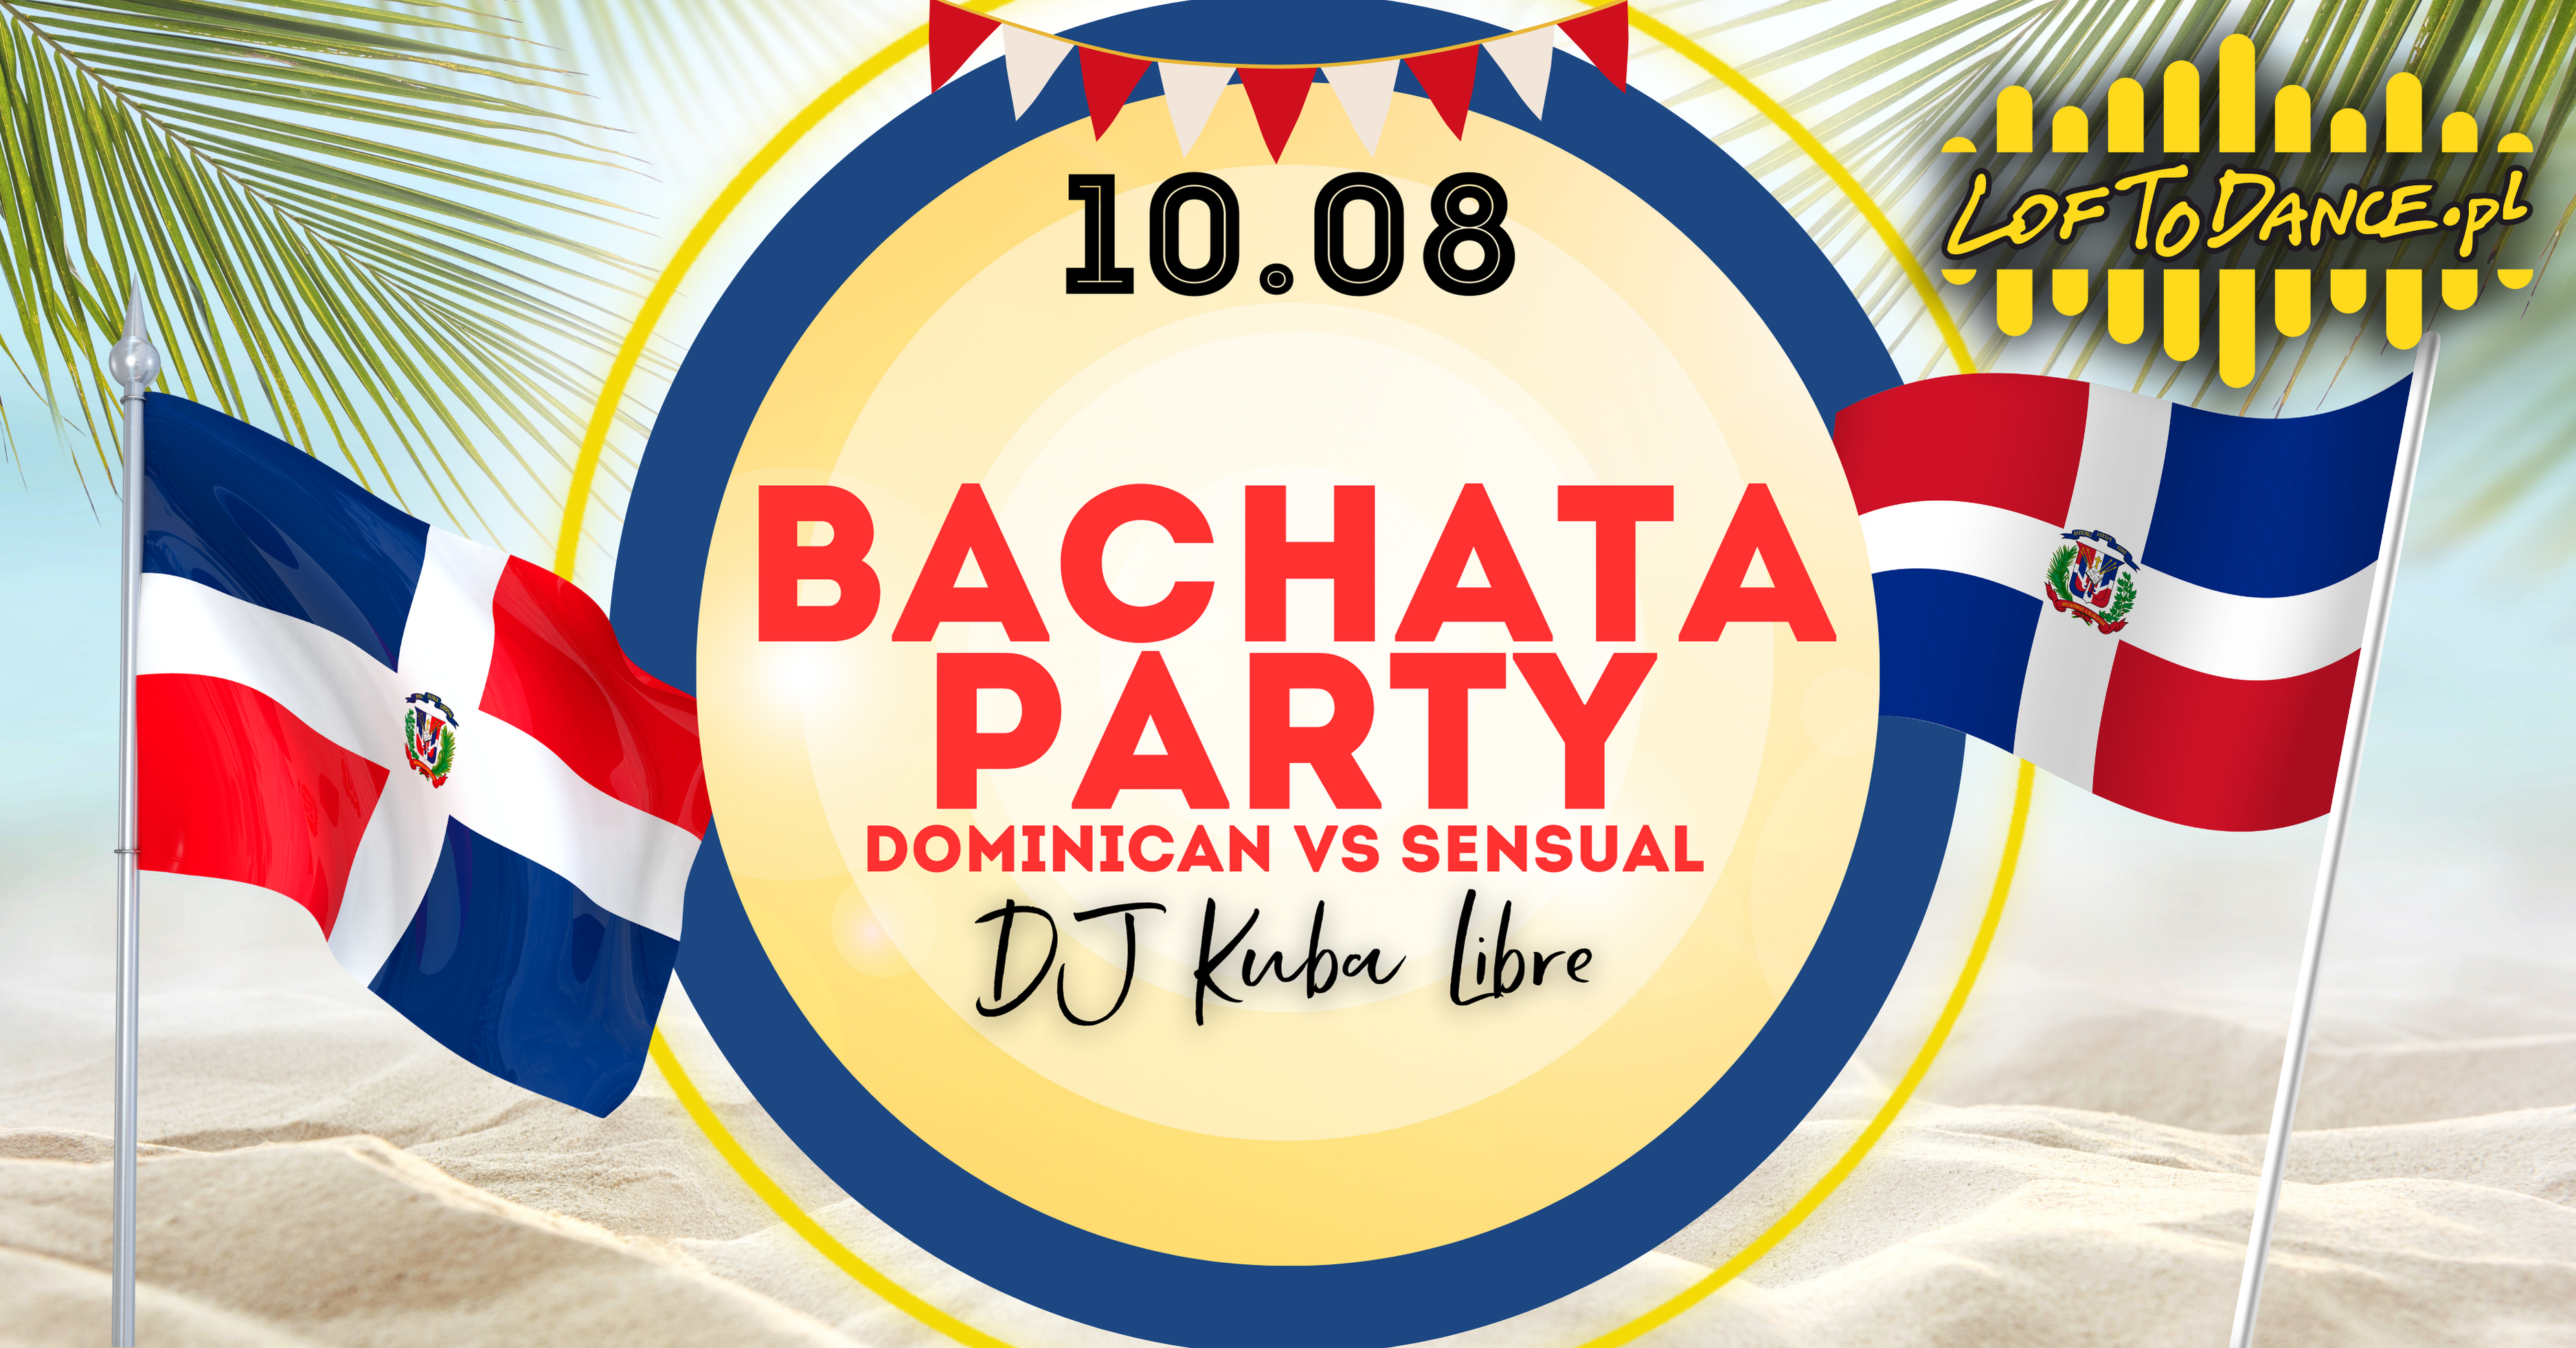 Bachata Party - Dominican vs Sensual - sklep Loftodance